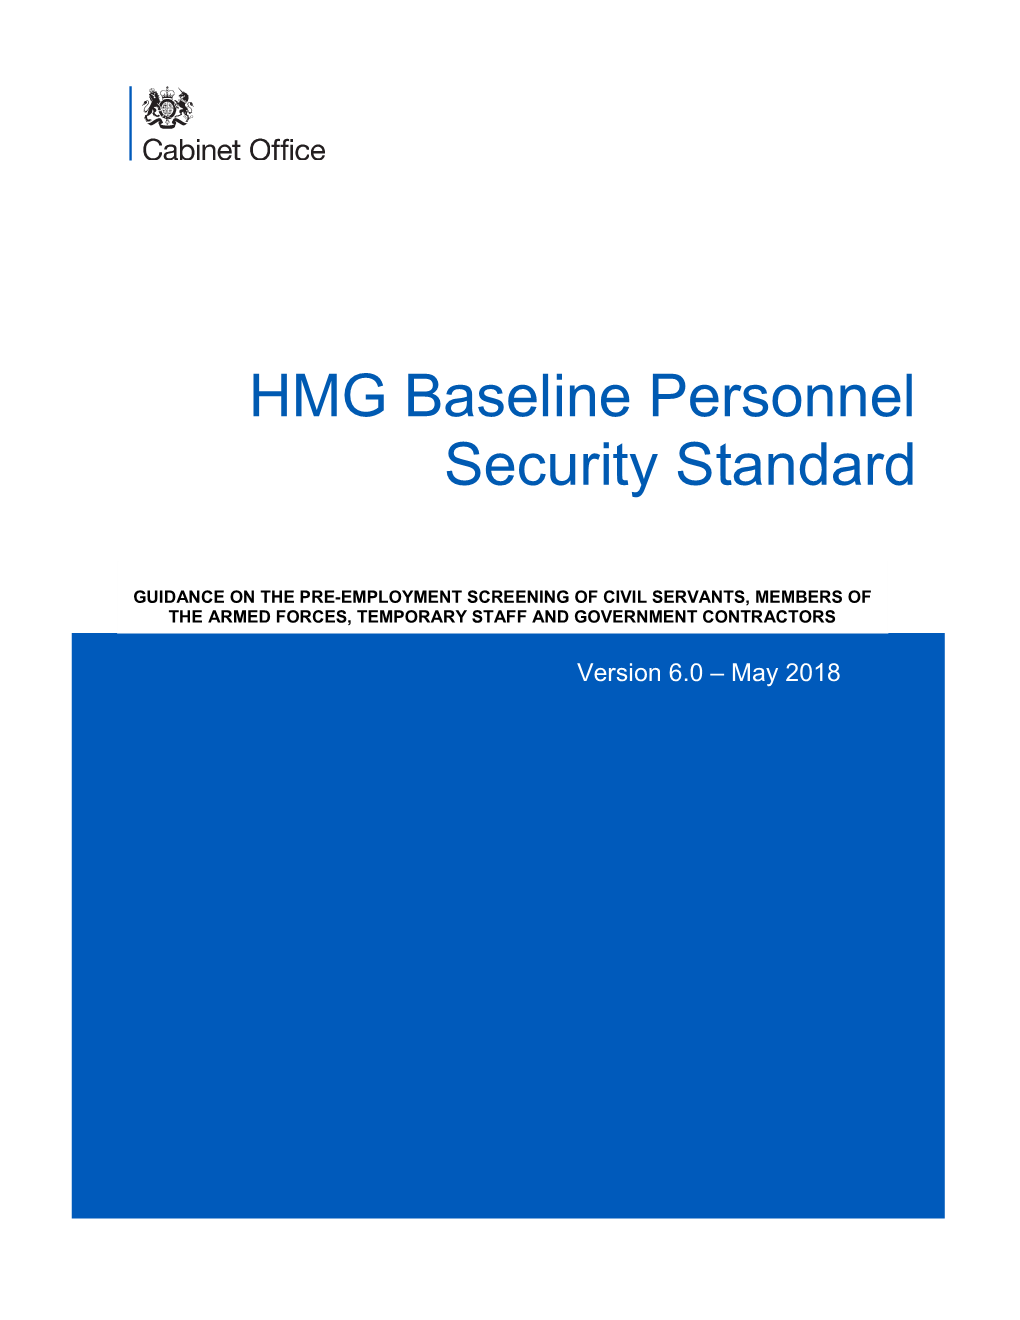 HMG Baseline Personnel Security Standard